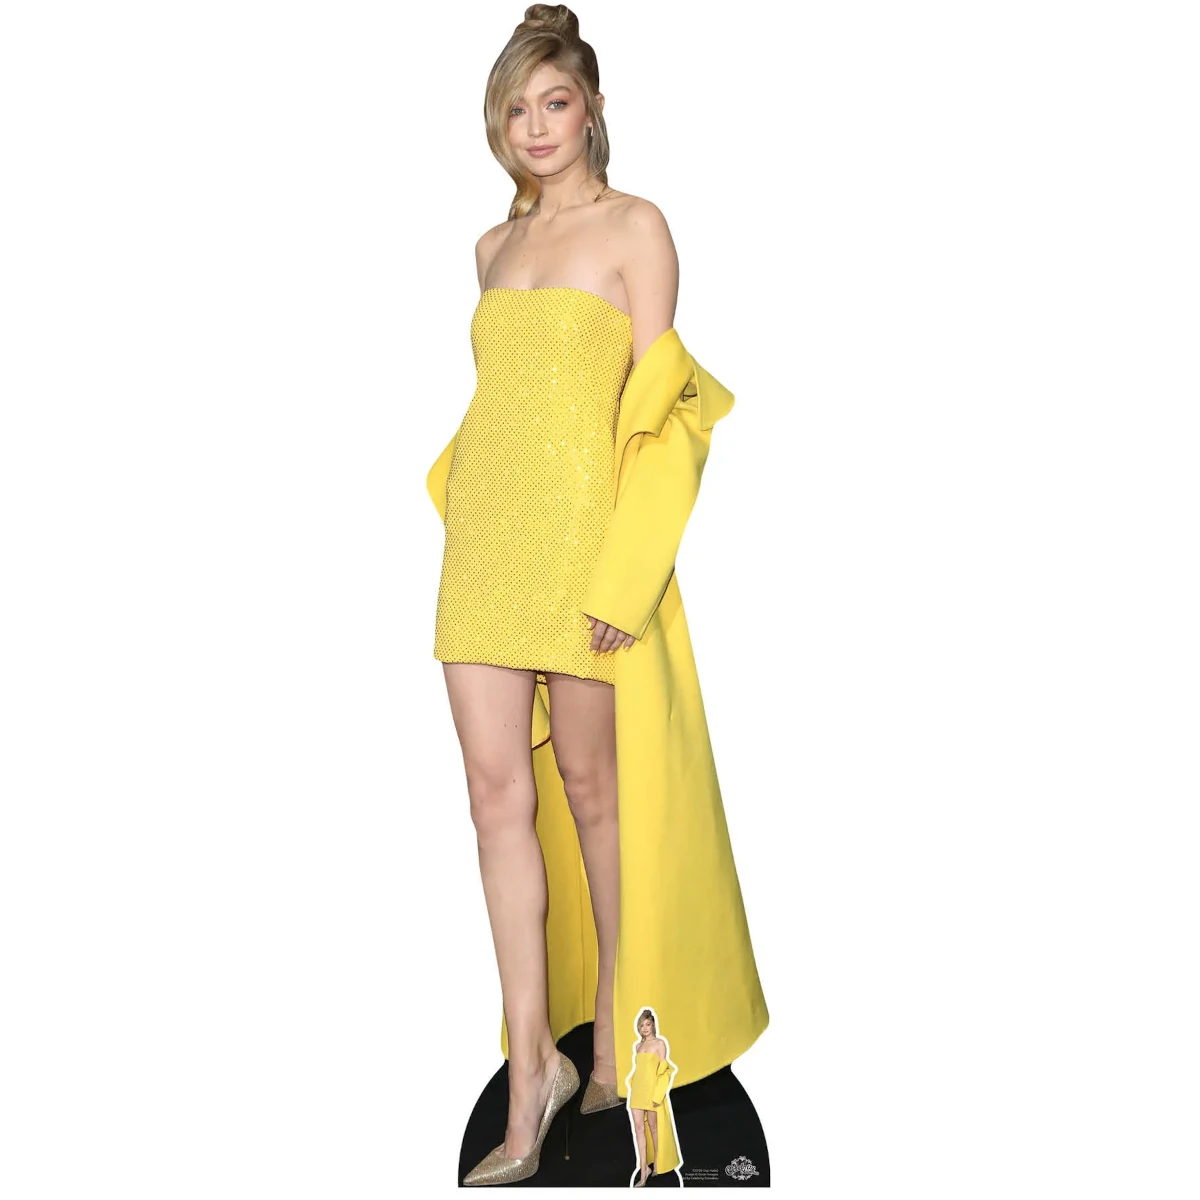 CS769 Gigi Hadid 'Yellow Dress' (American Model) Lifesize + Mini Cardboard Cutout Standee Front